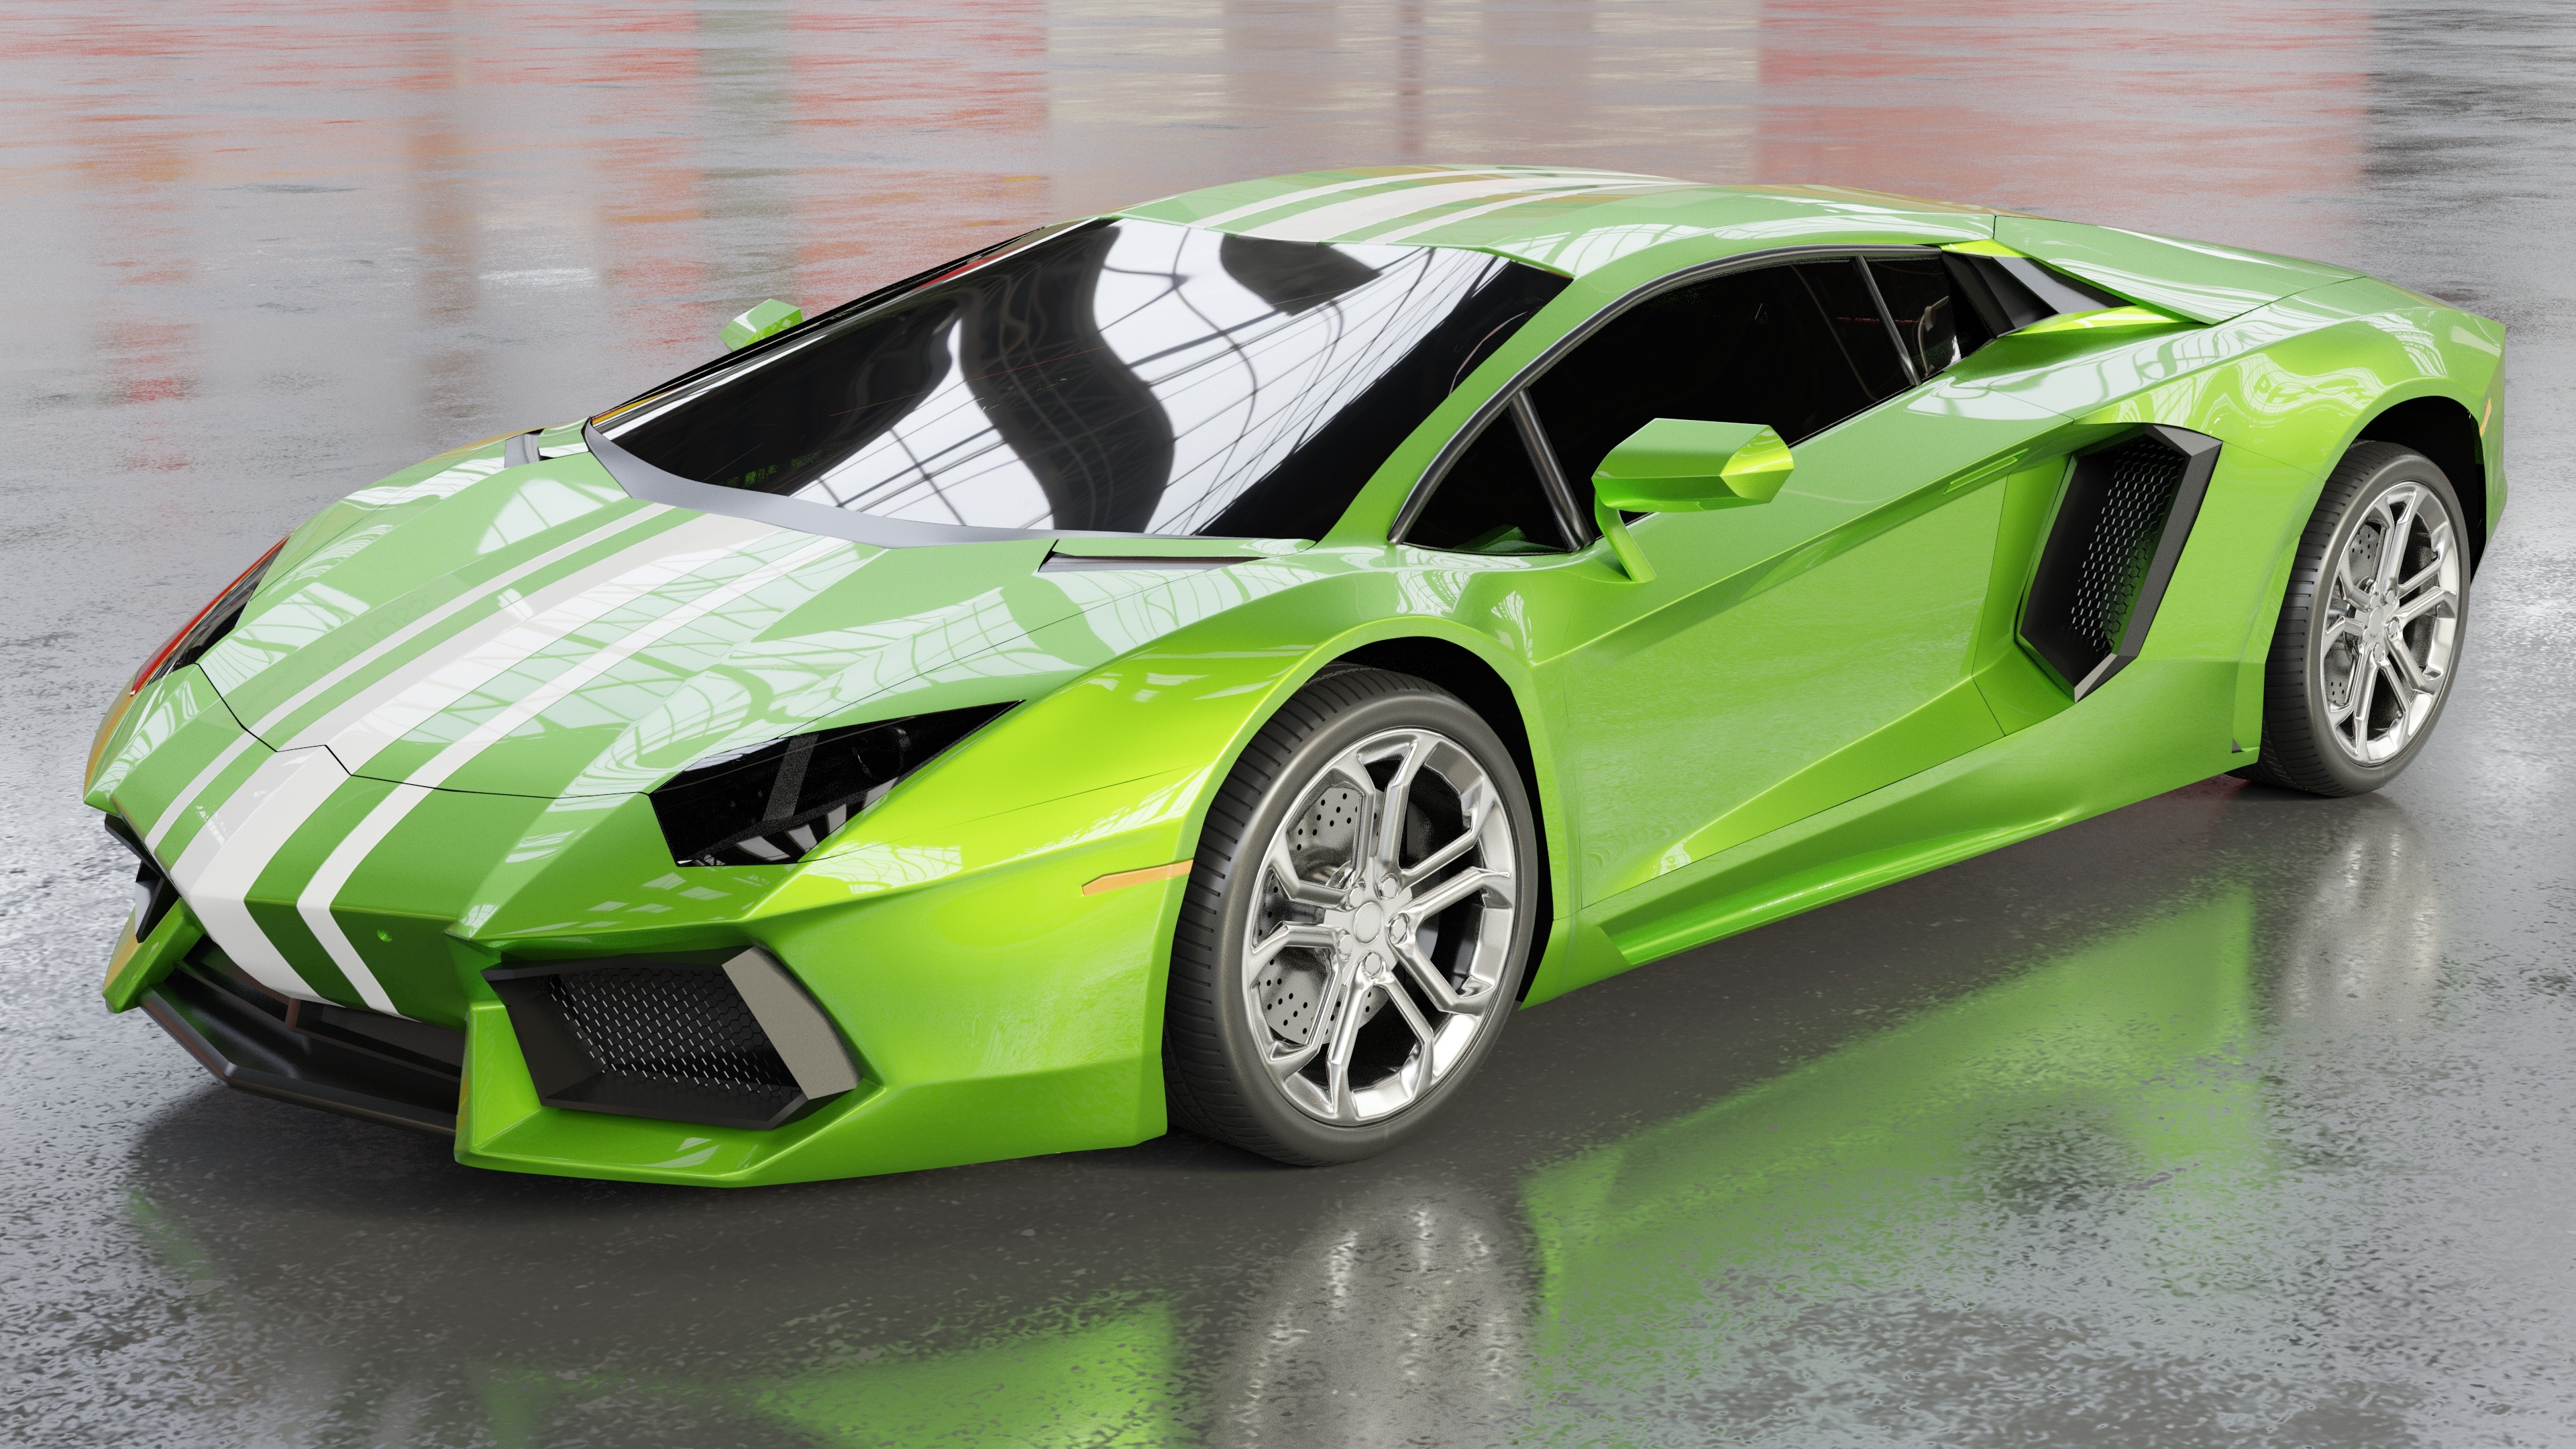 Lamborghini Aventador, Blender masterpiece, Finished project showcase, Artist community marvel, 3840x2160 4K Desktop